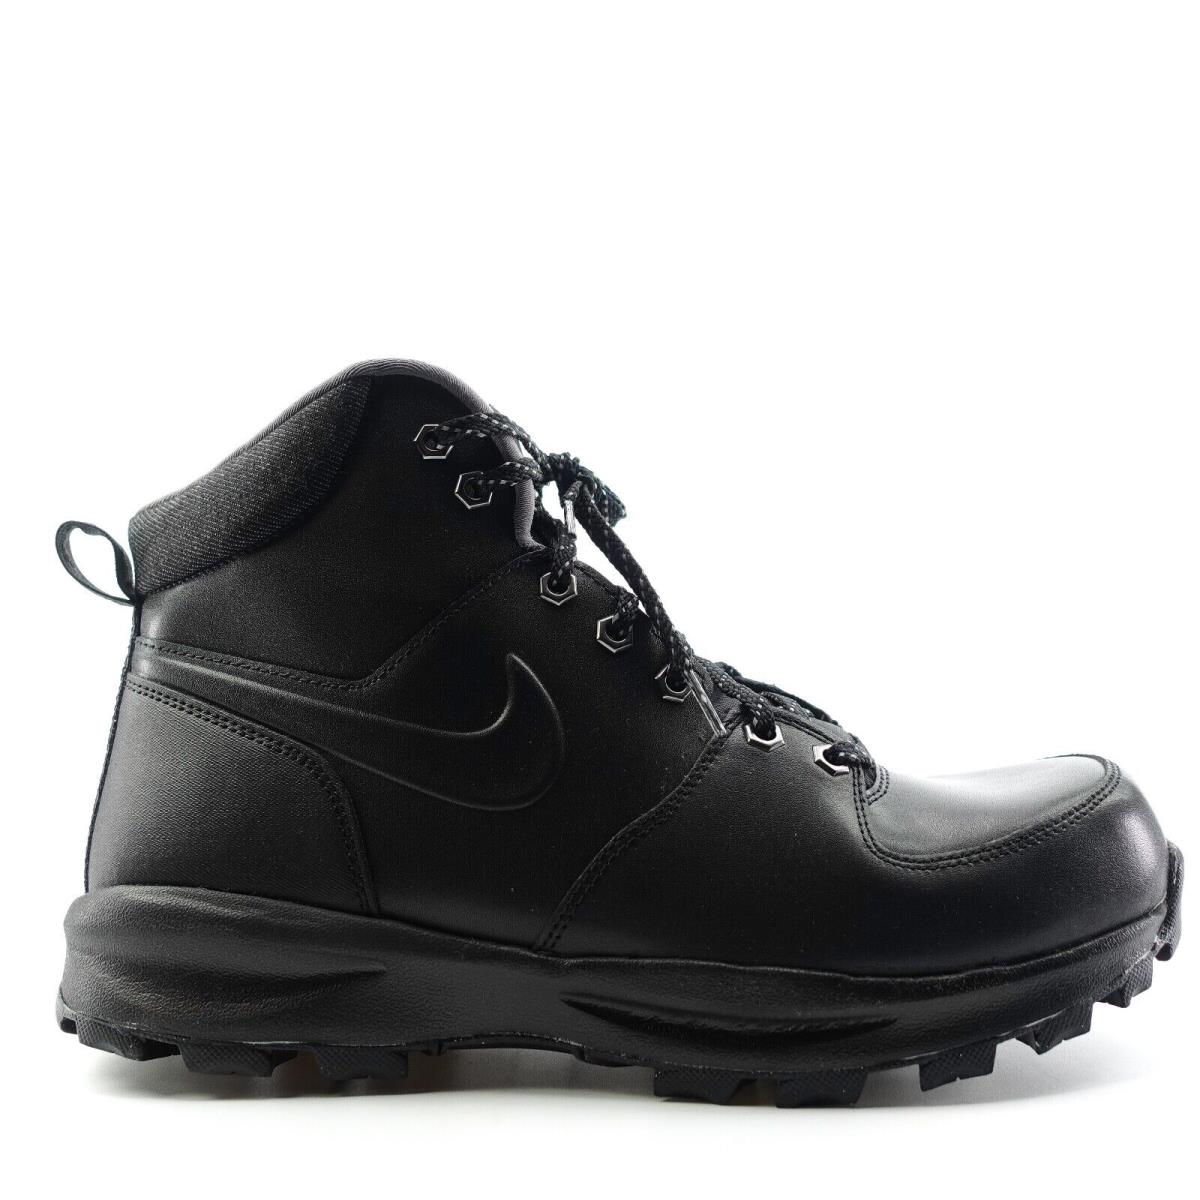 Nike Mens Manoa Leather SE Winter Boots Shoes Black Gunsmoke DC8892 001 ...